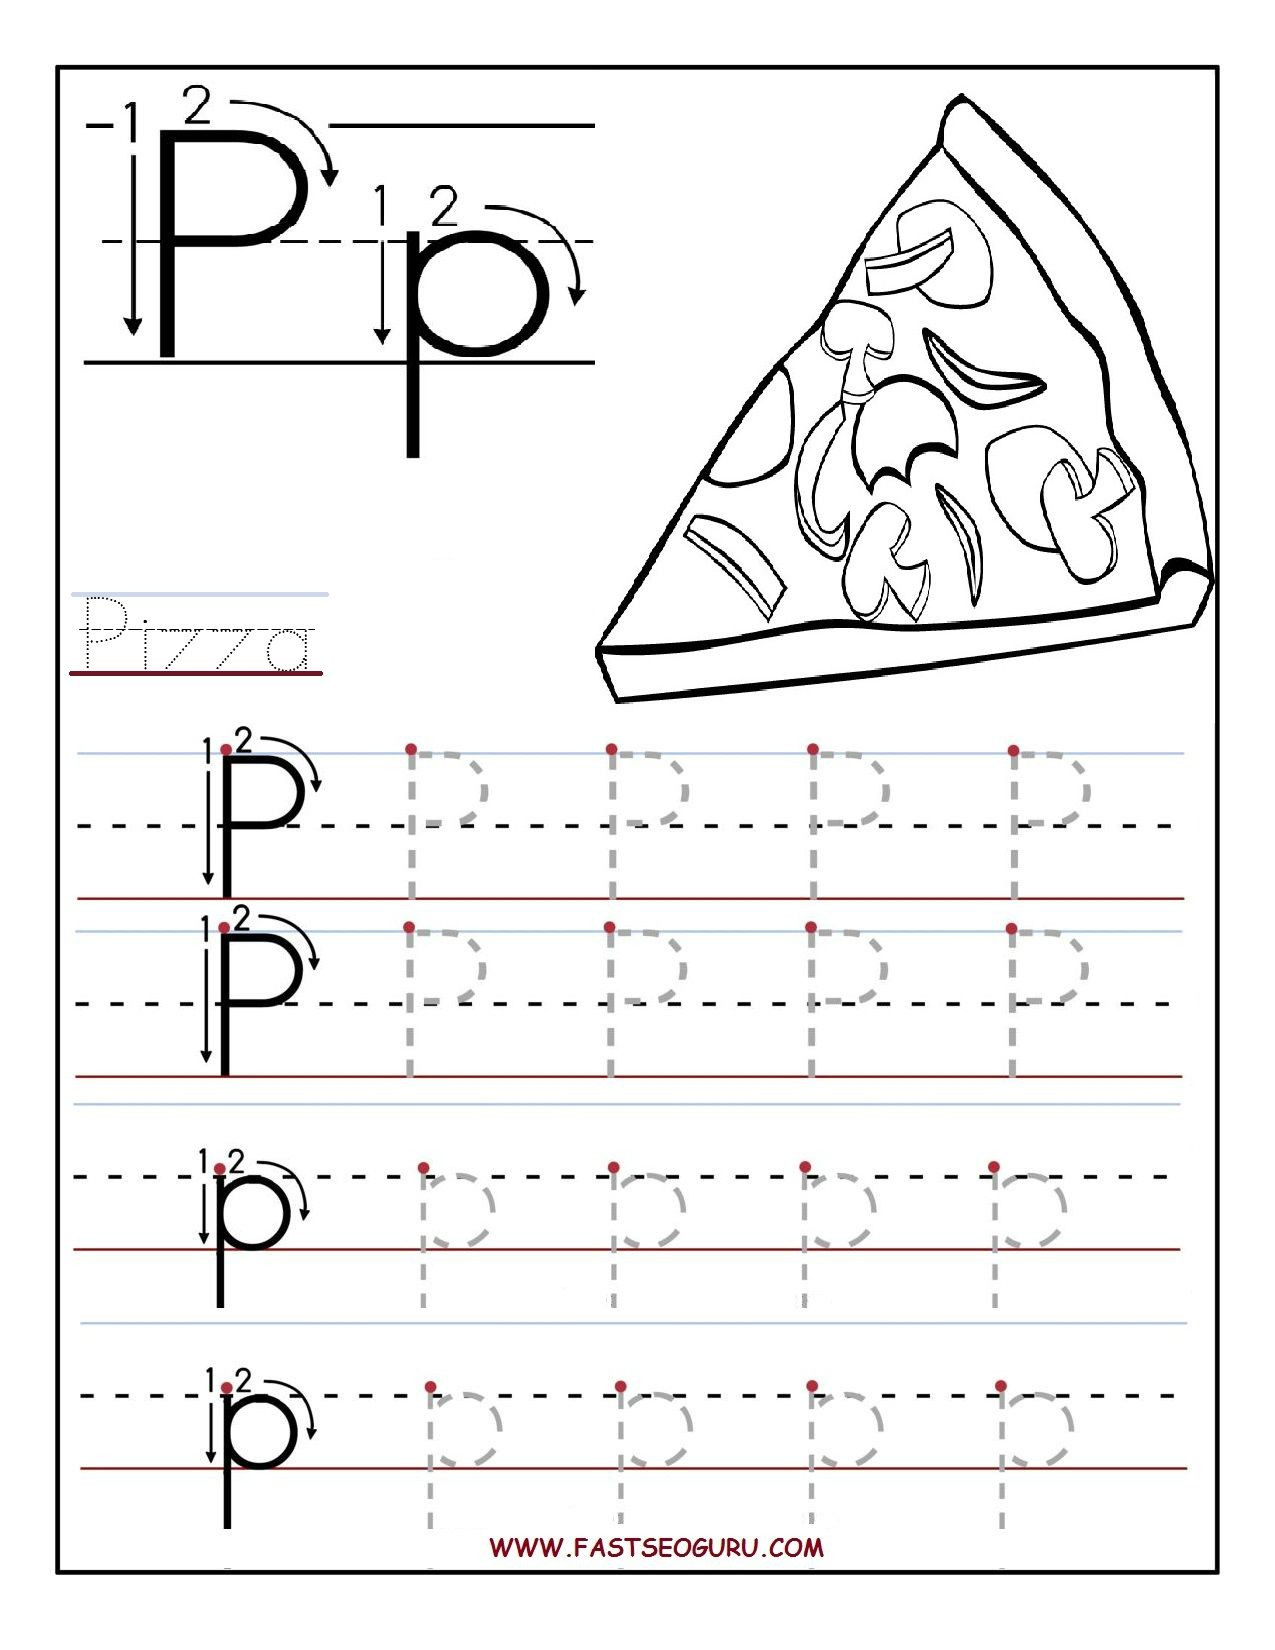 Letter P Preschool Worksheets Printable Letter P Tracing Worksheets for Preschool